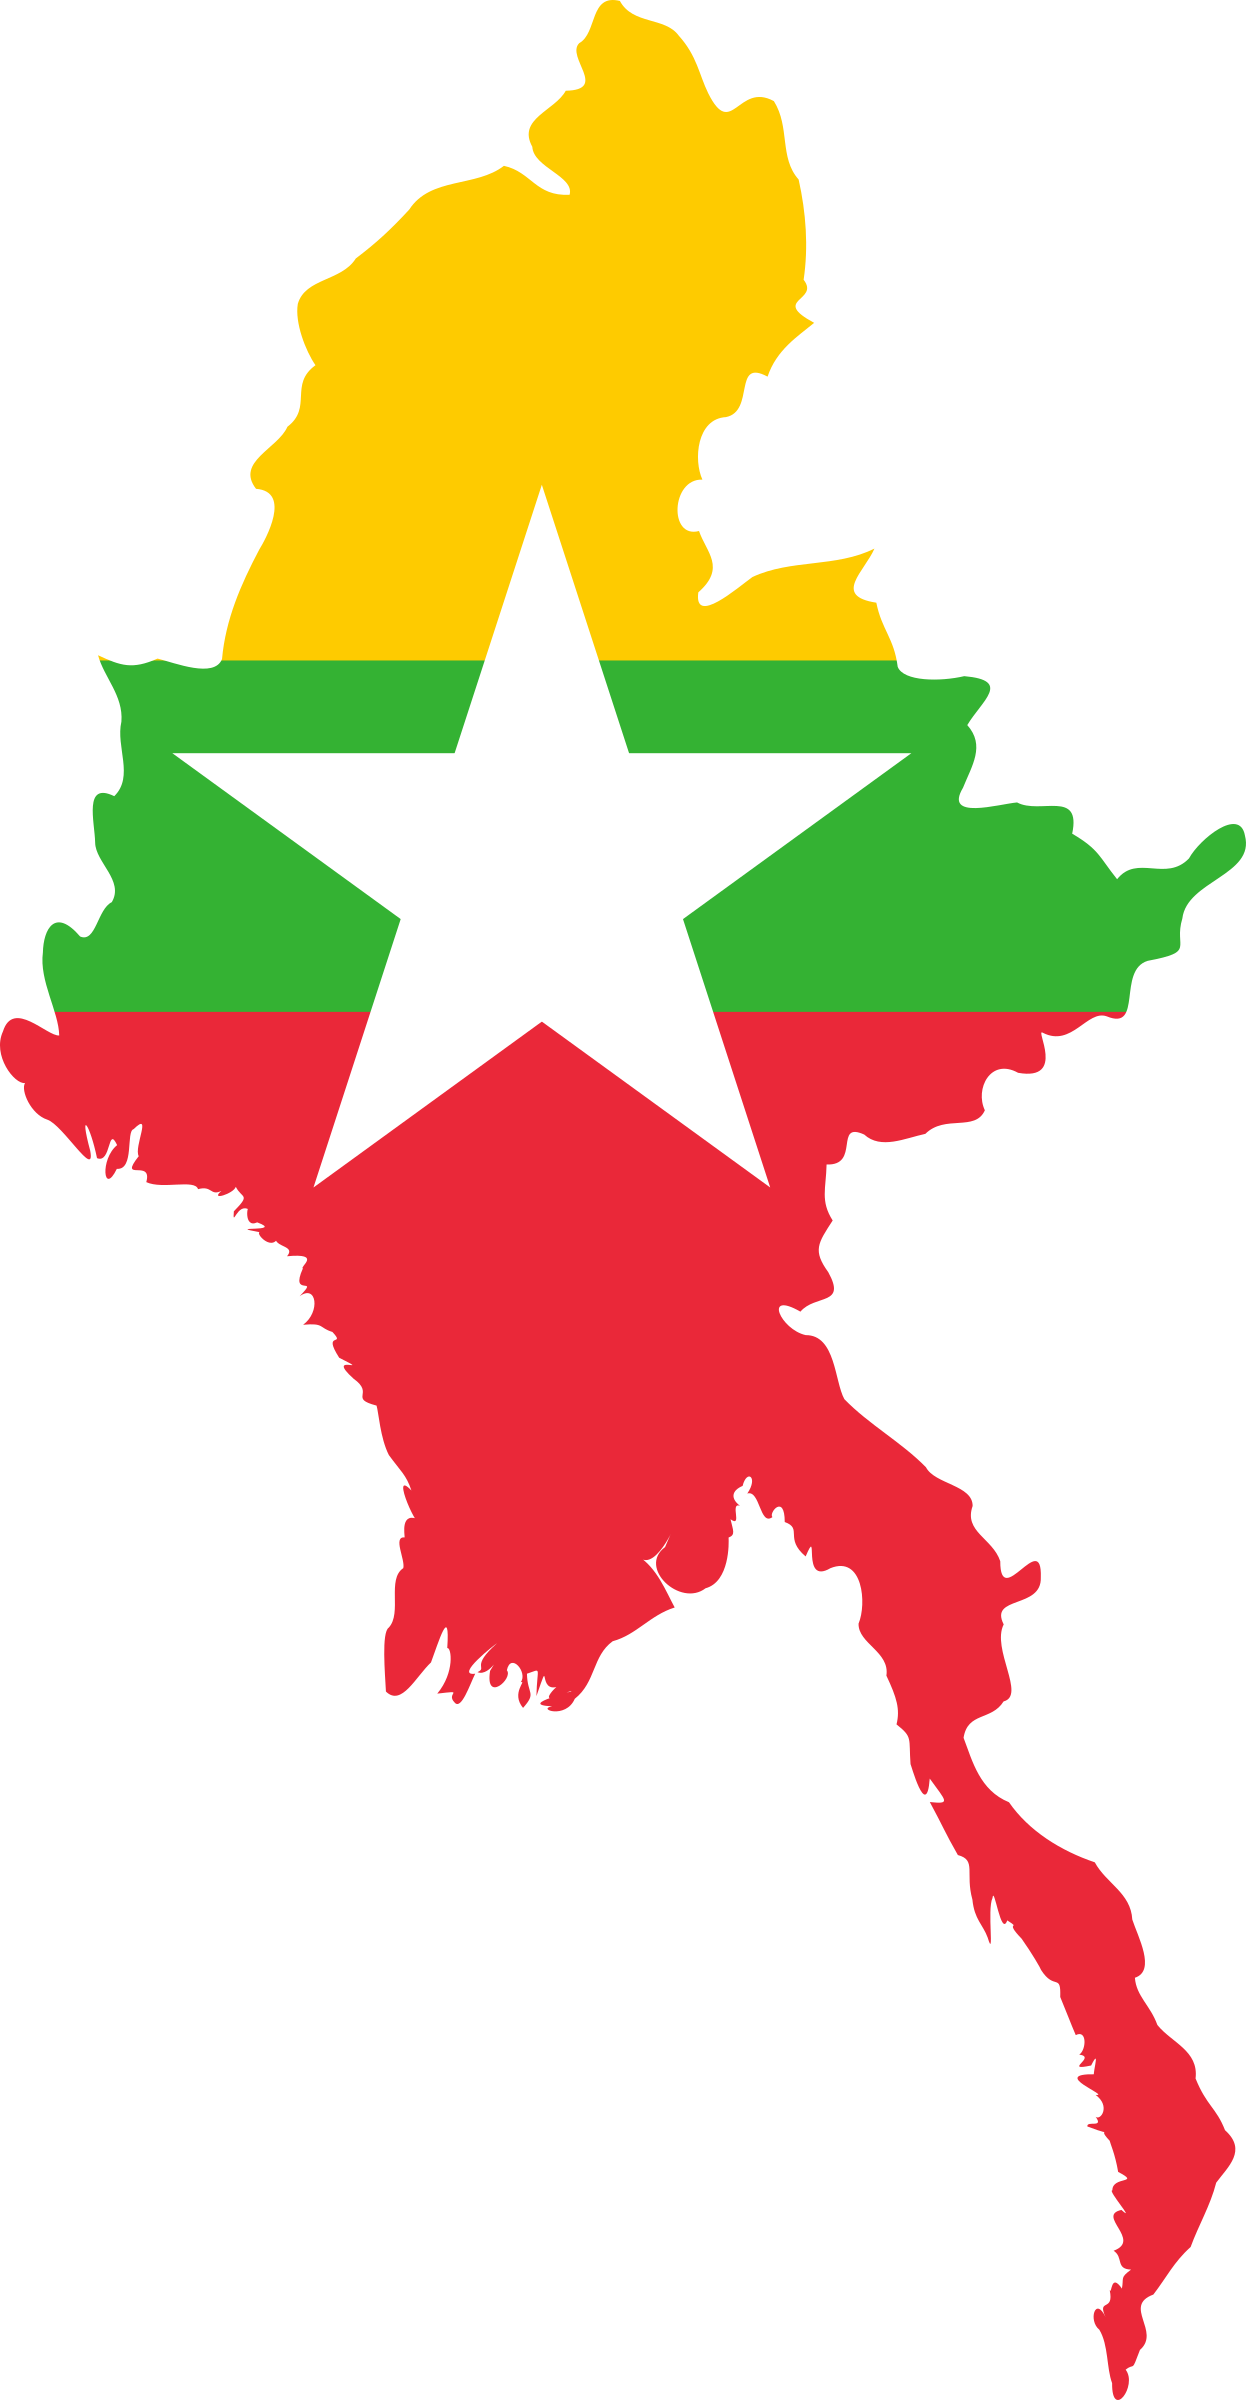 Big Image (Png) - Myanmar Flag, Transparent background PNG HD thumbnail